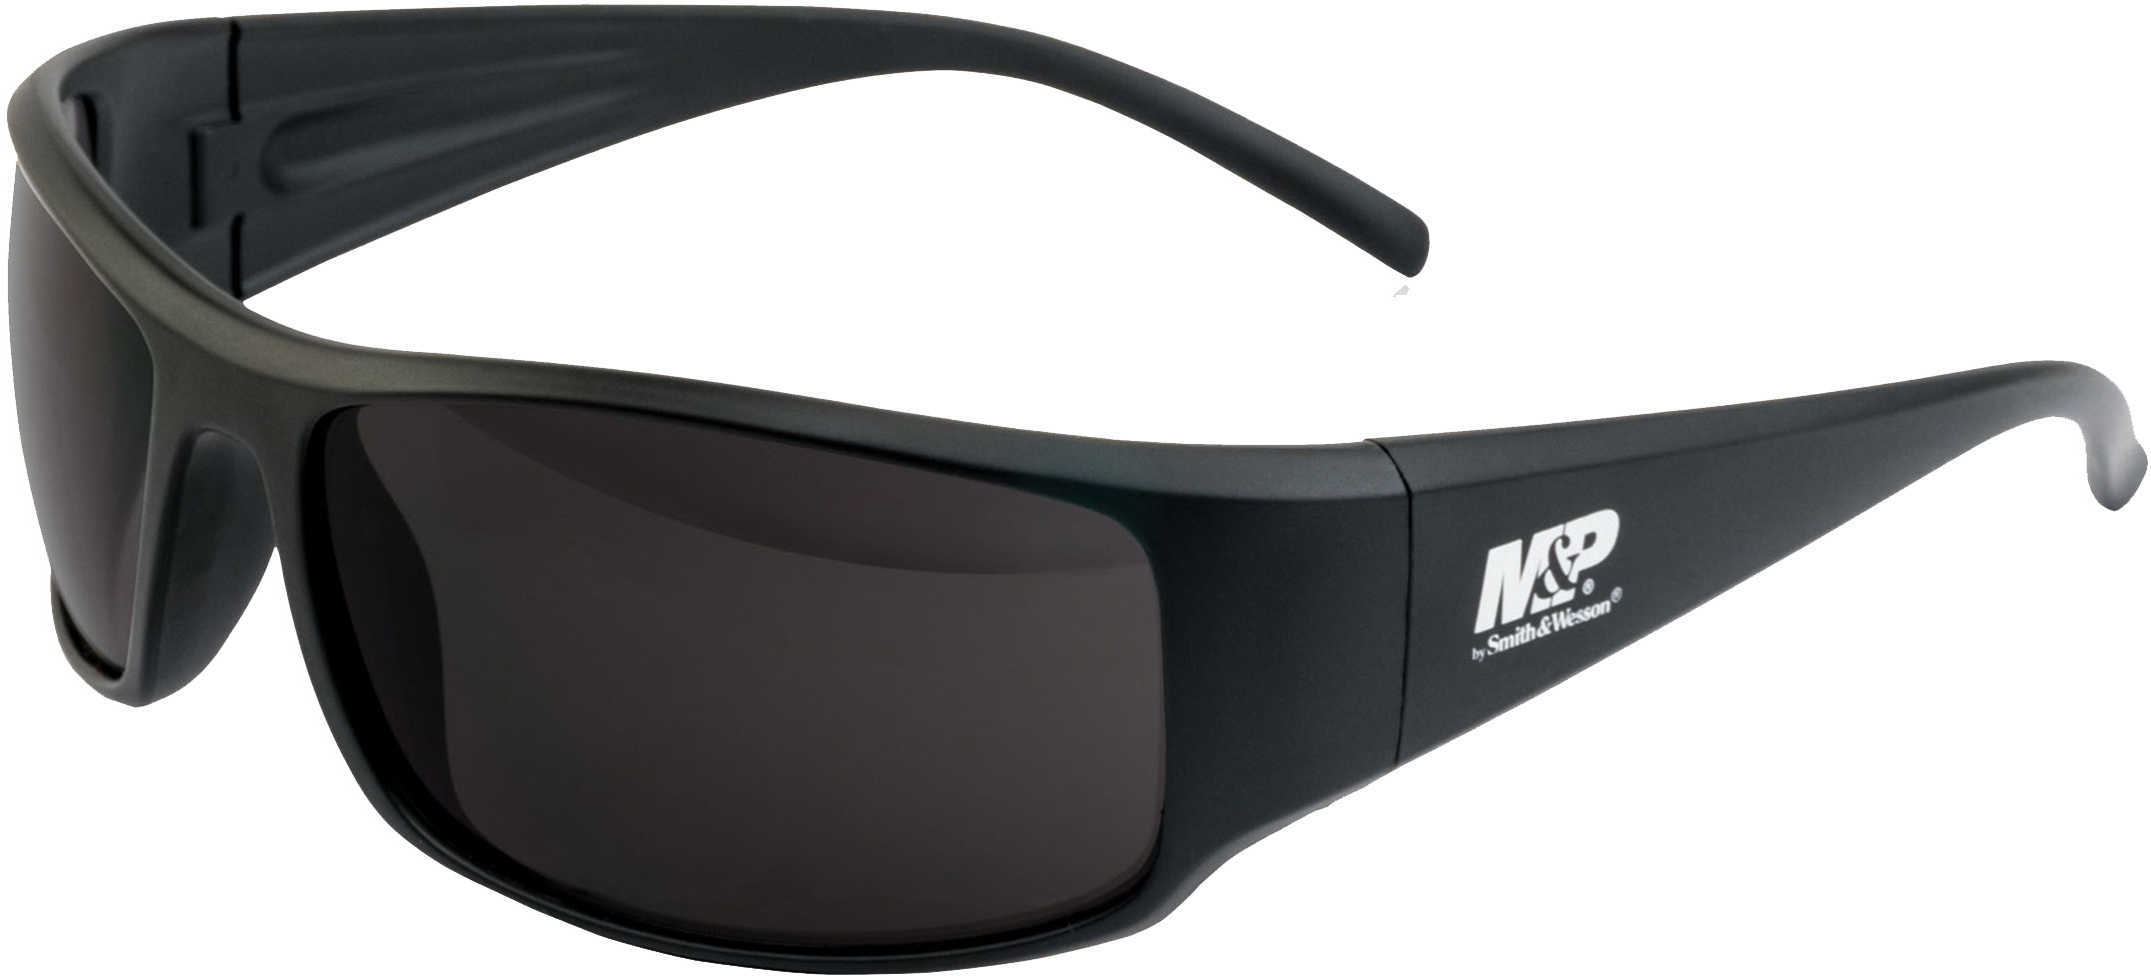 Smith & Wesson M&P Thunderbolt Shooting Glasses Black Frame, Smoke Lens Md: 110166